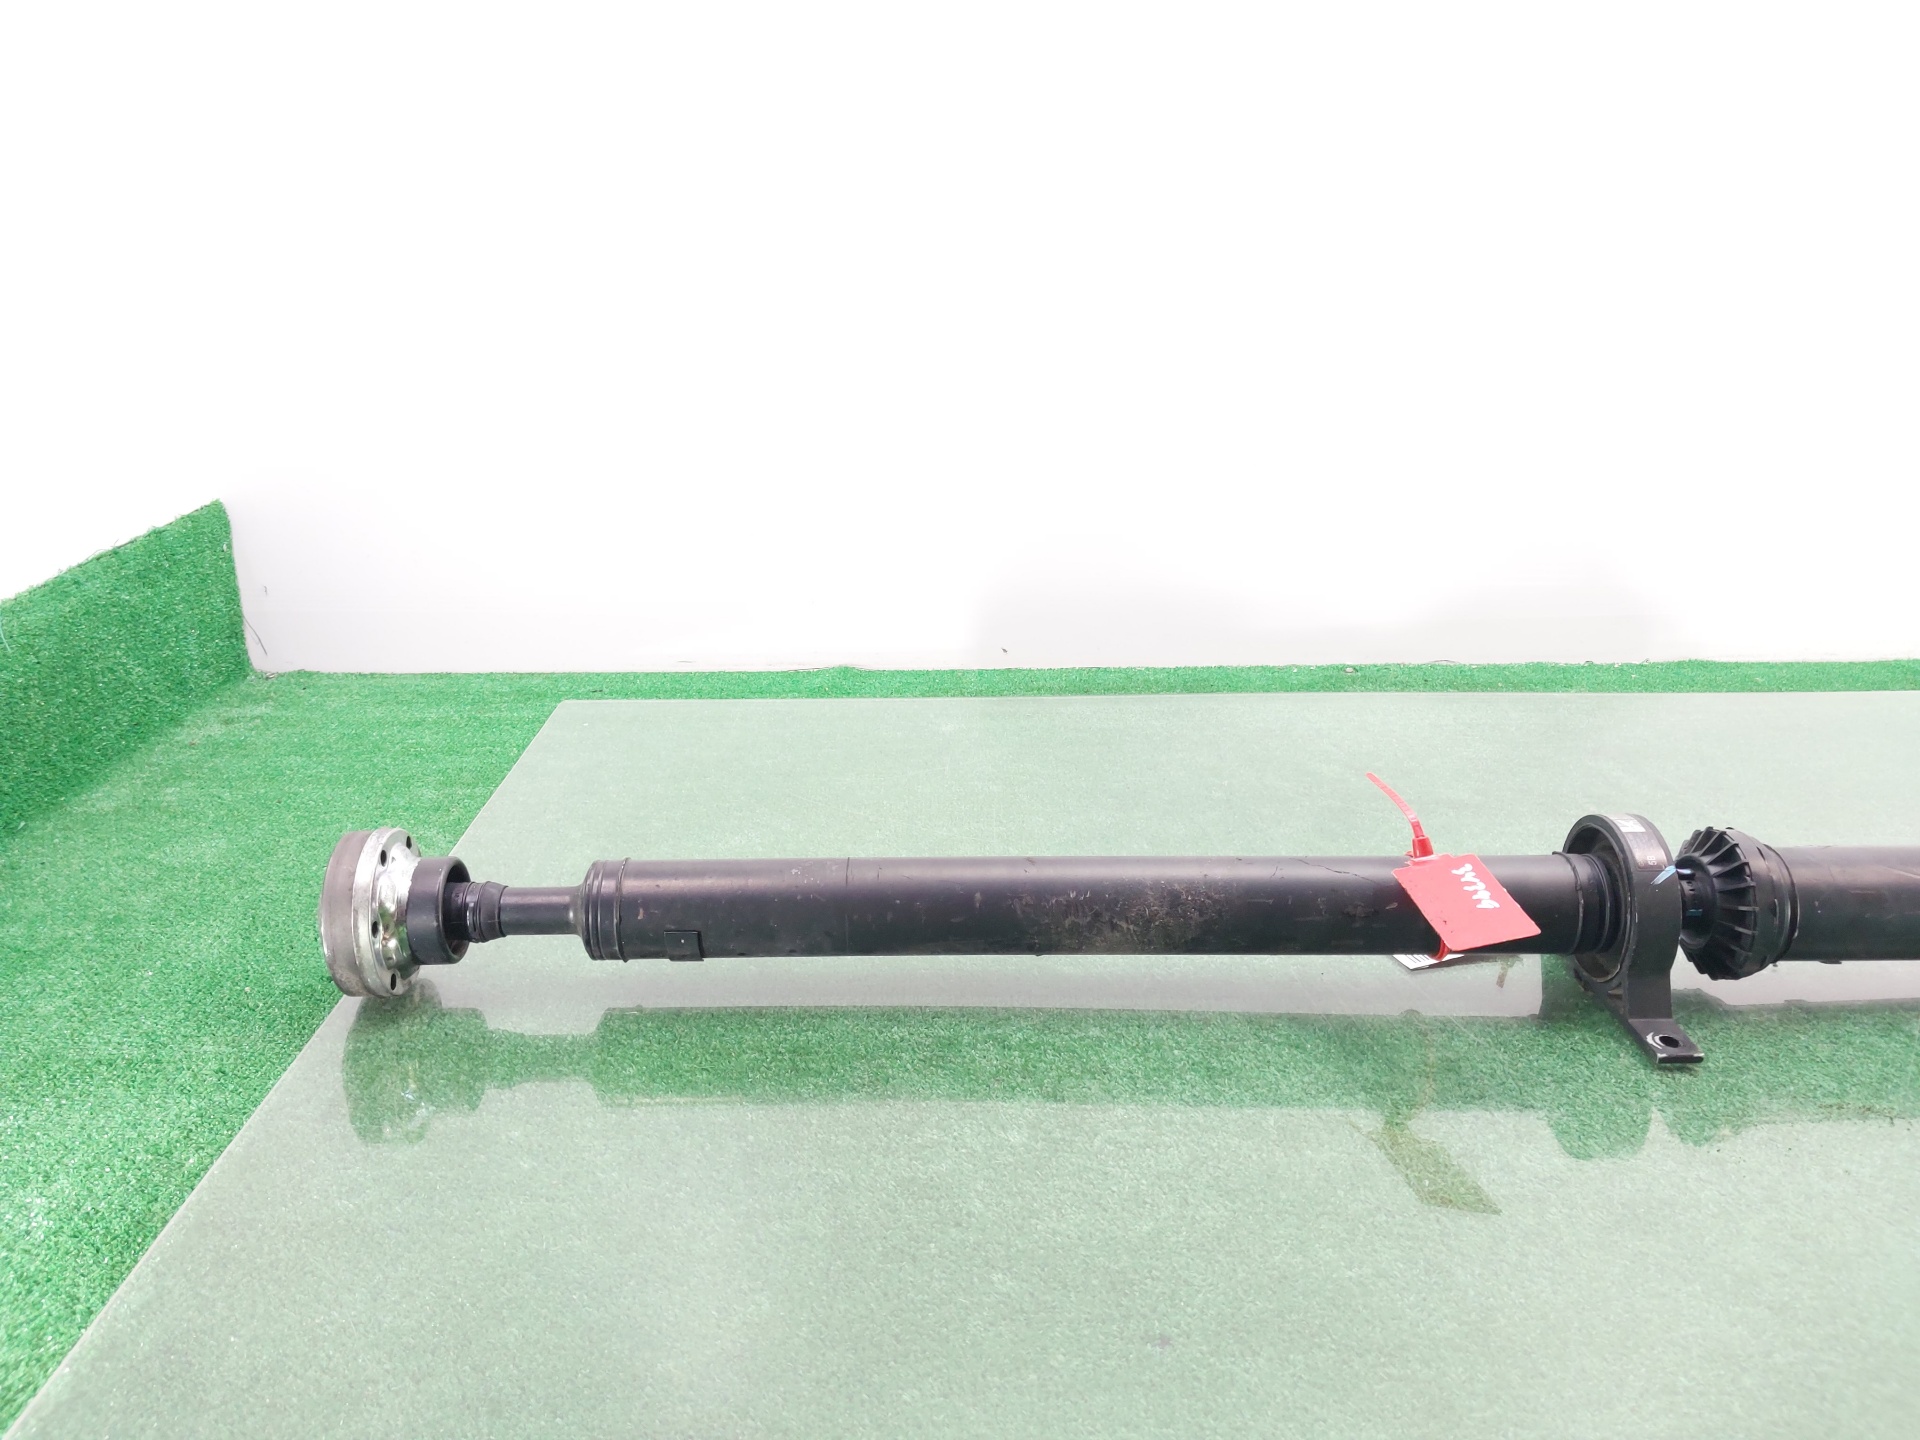 JAGUAR XE 1 generation (2014-2024) Gearbox Short Propshaft GX734365BB 25295822